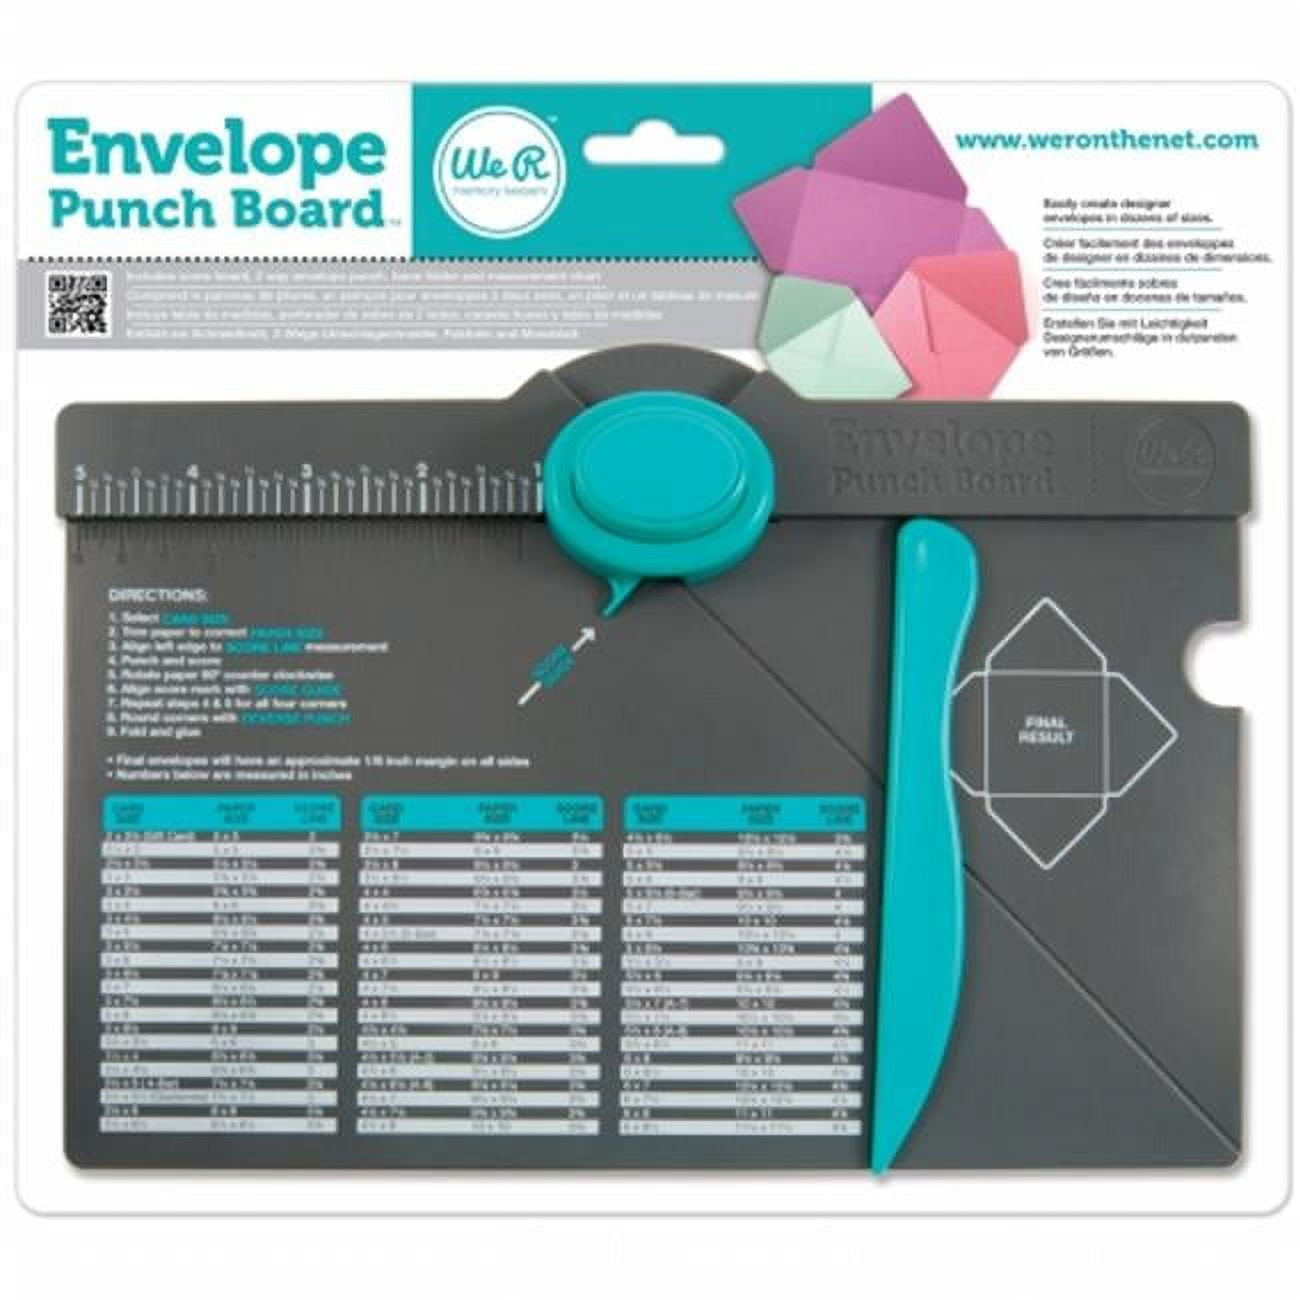 We R Makers Envelope Punch Board